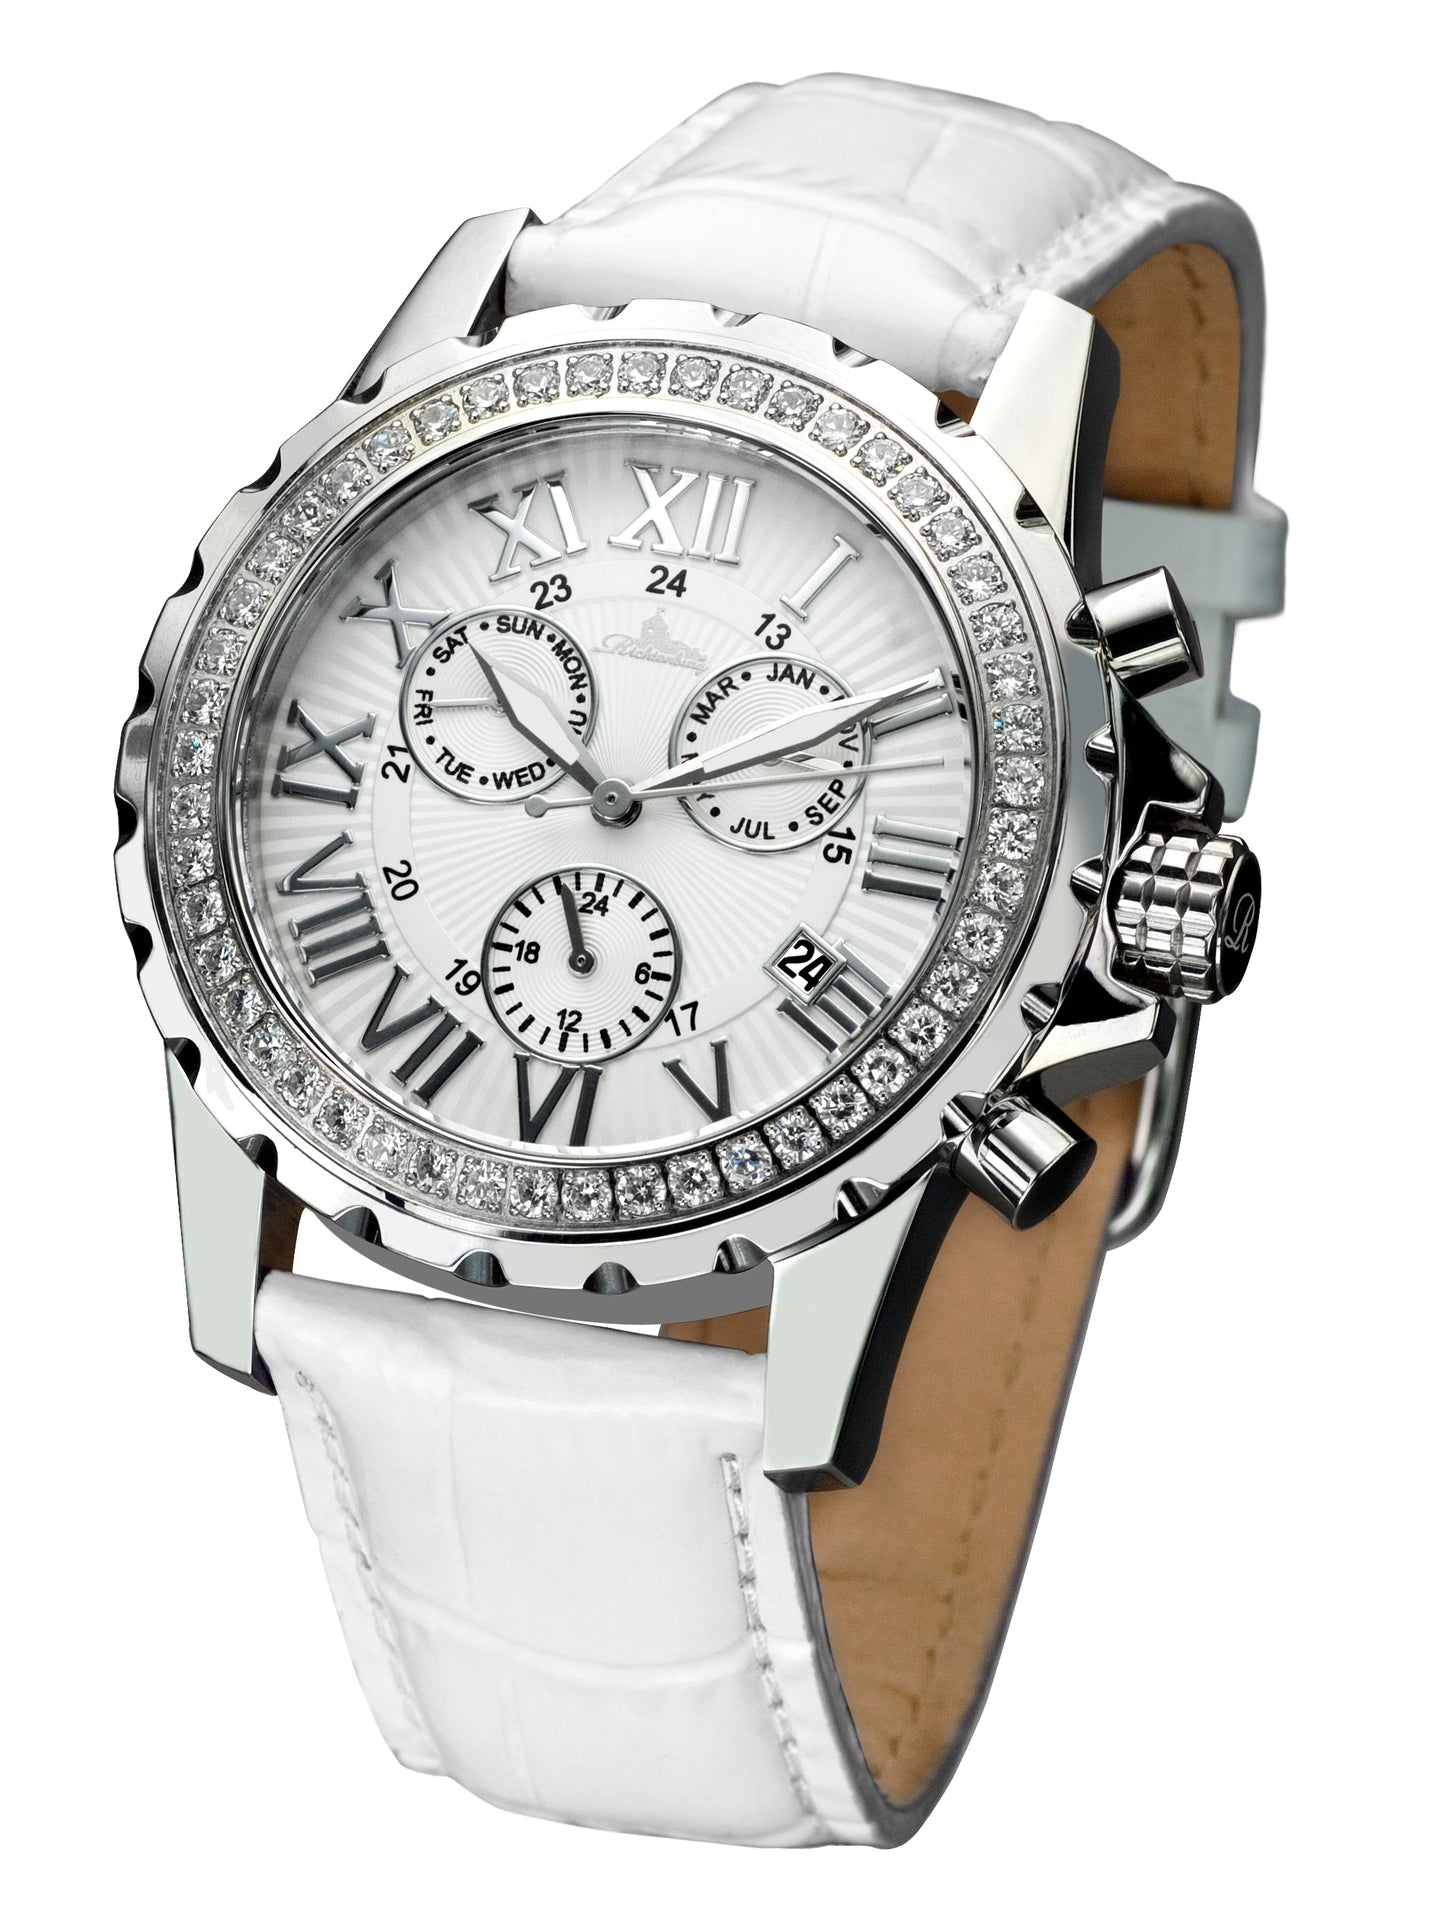 Automatic watches — Romantica — Richtenburg — white